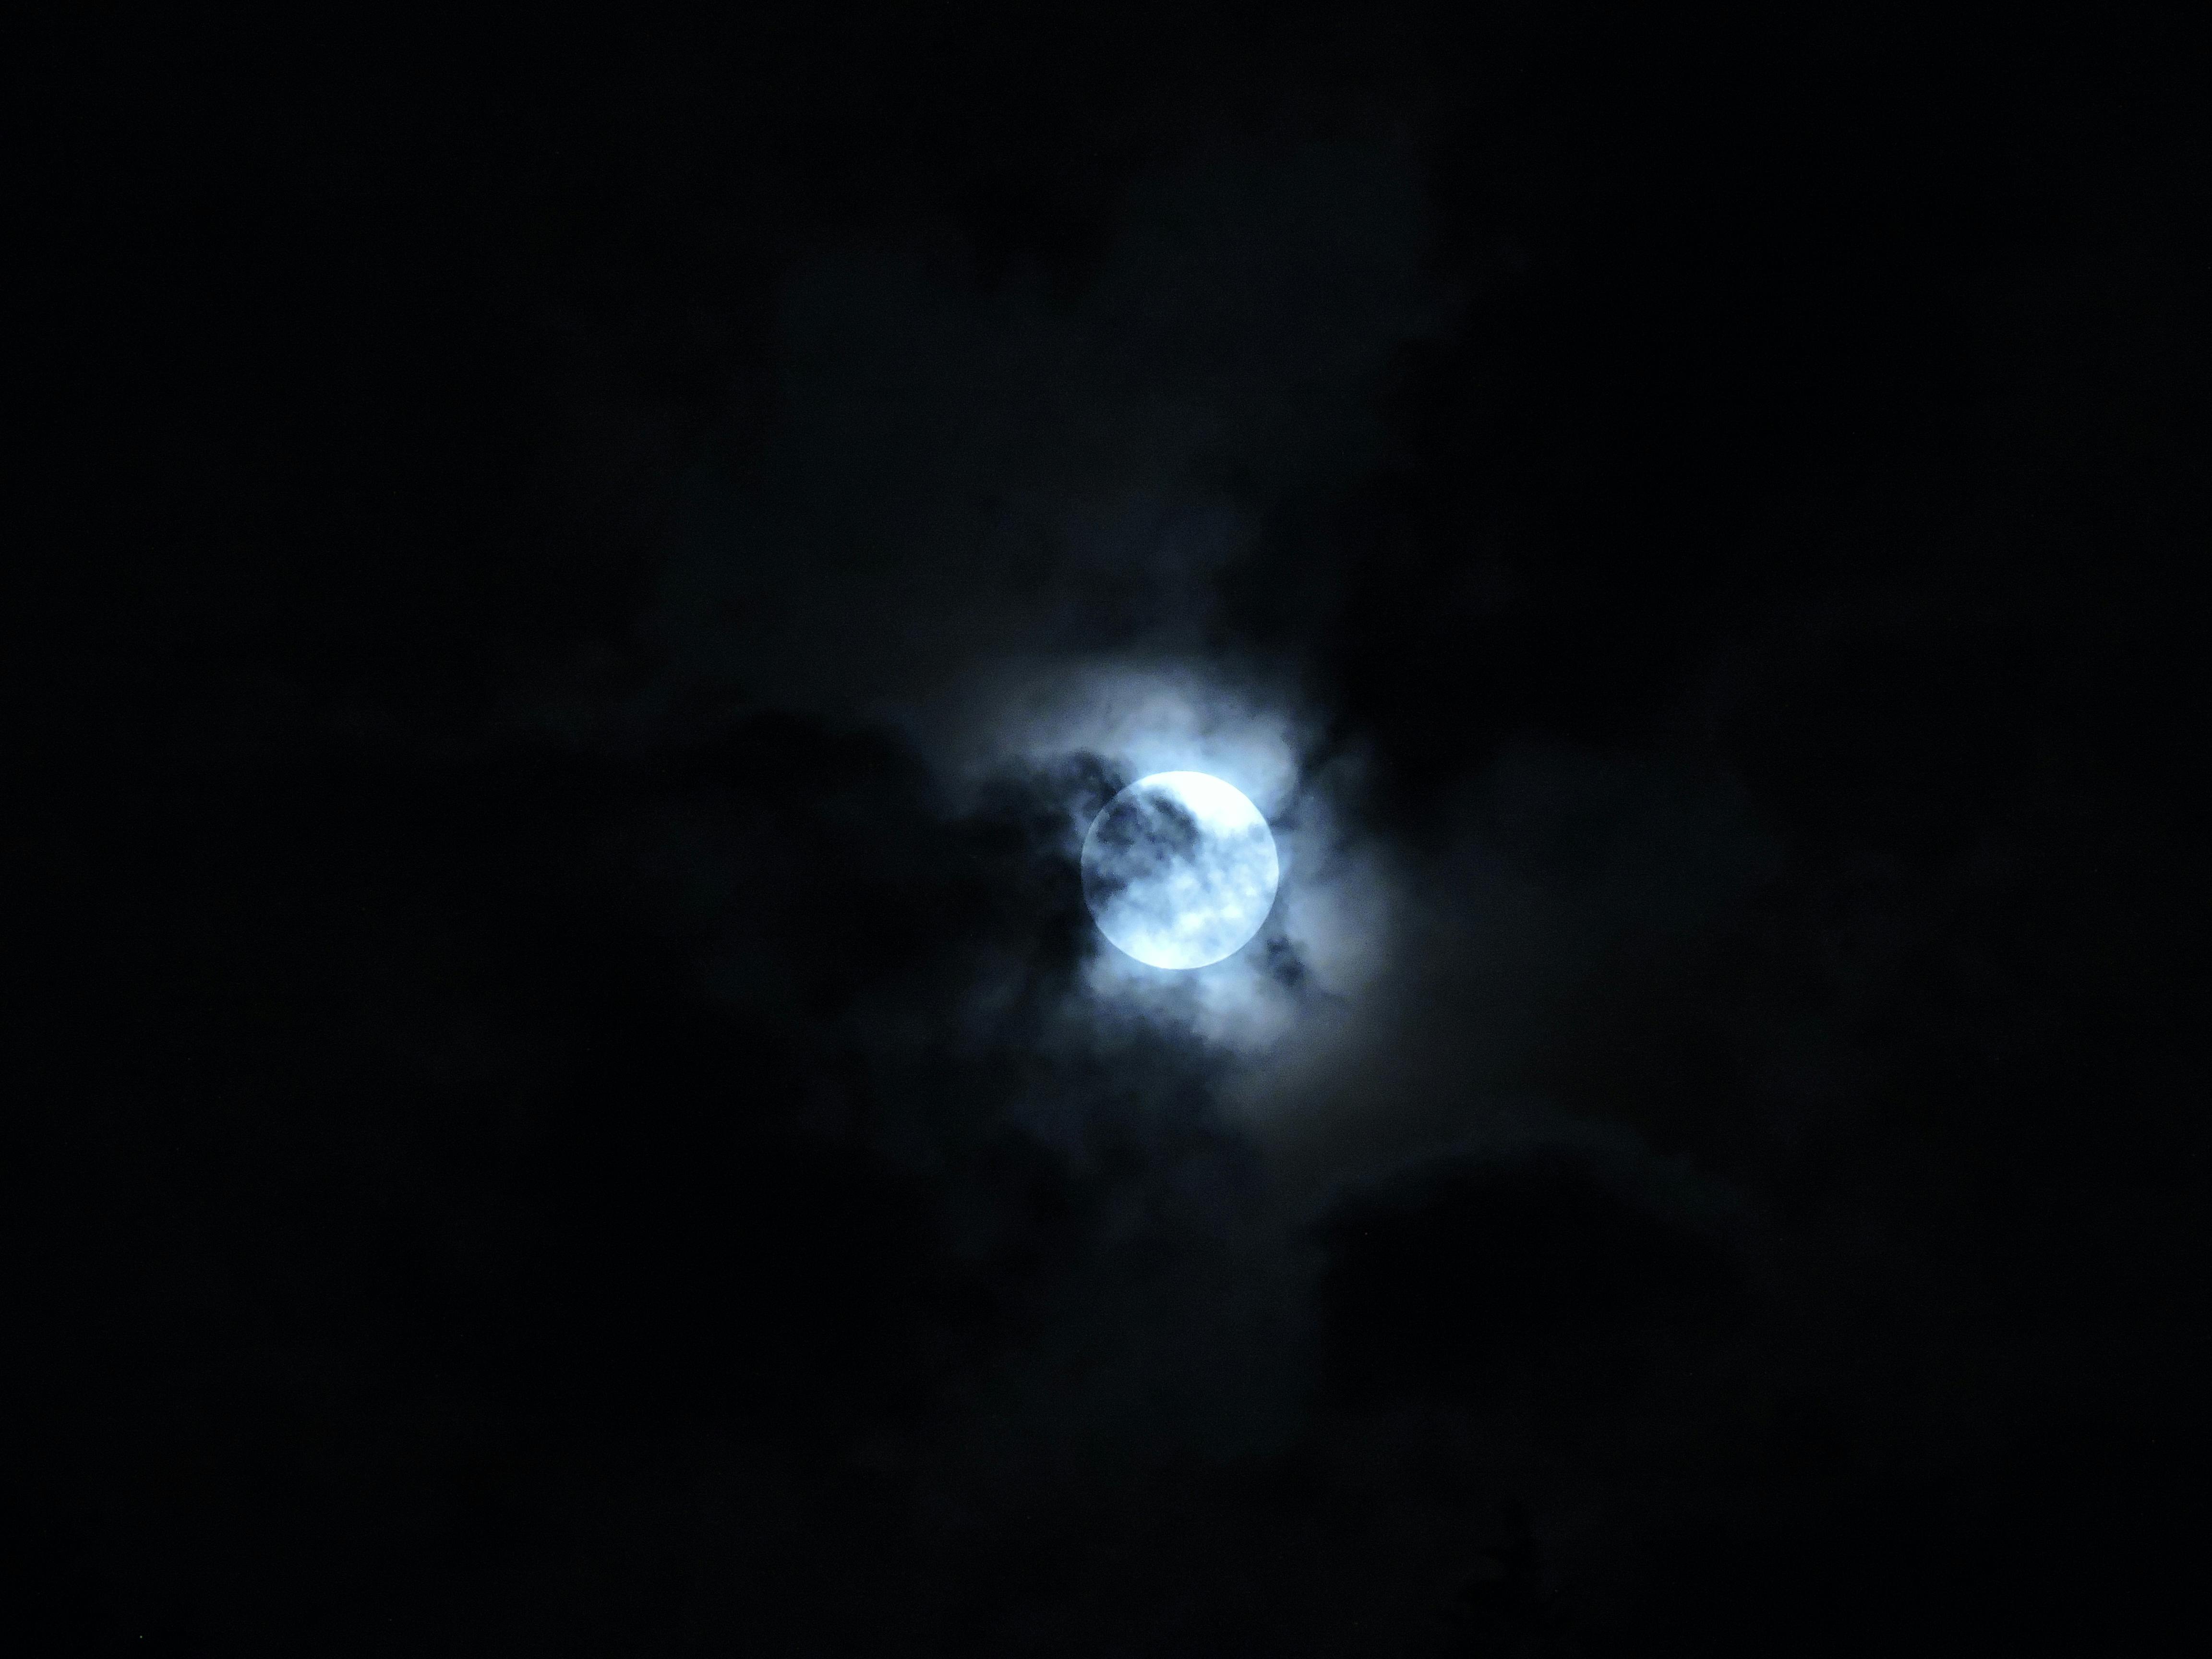 Free stock photo of blue moon, Cloudy night sky, moon